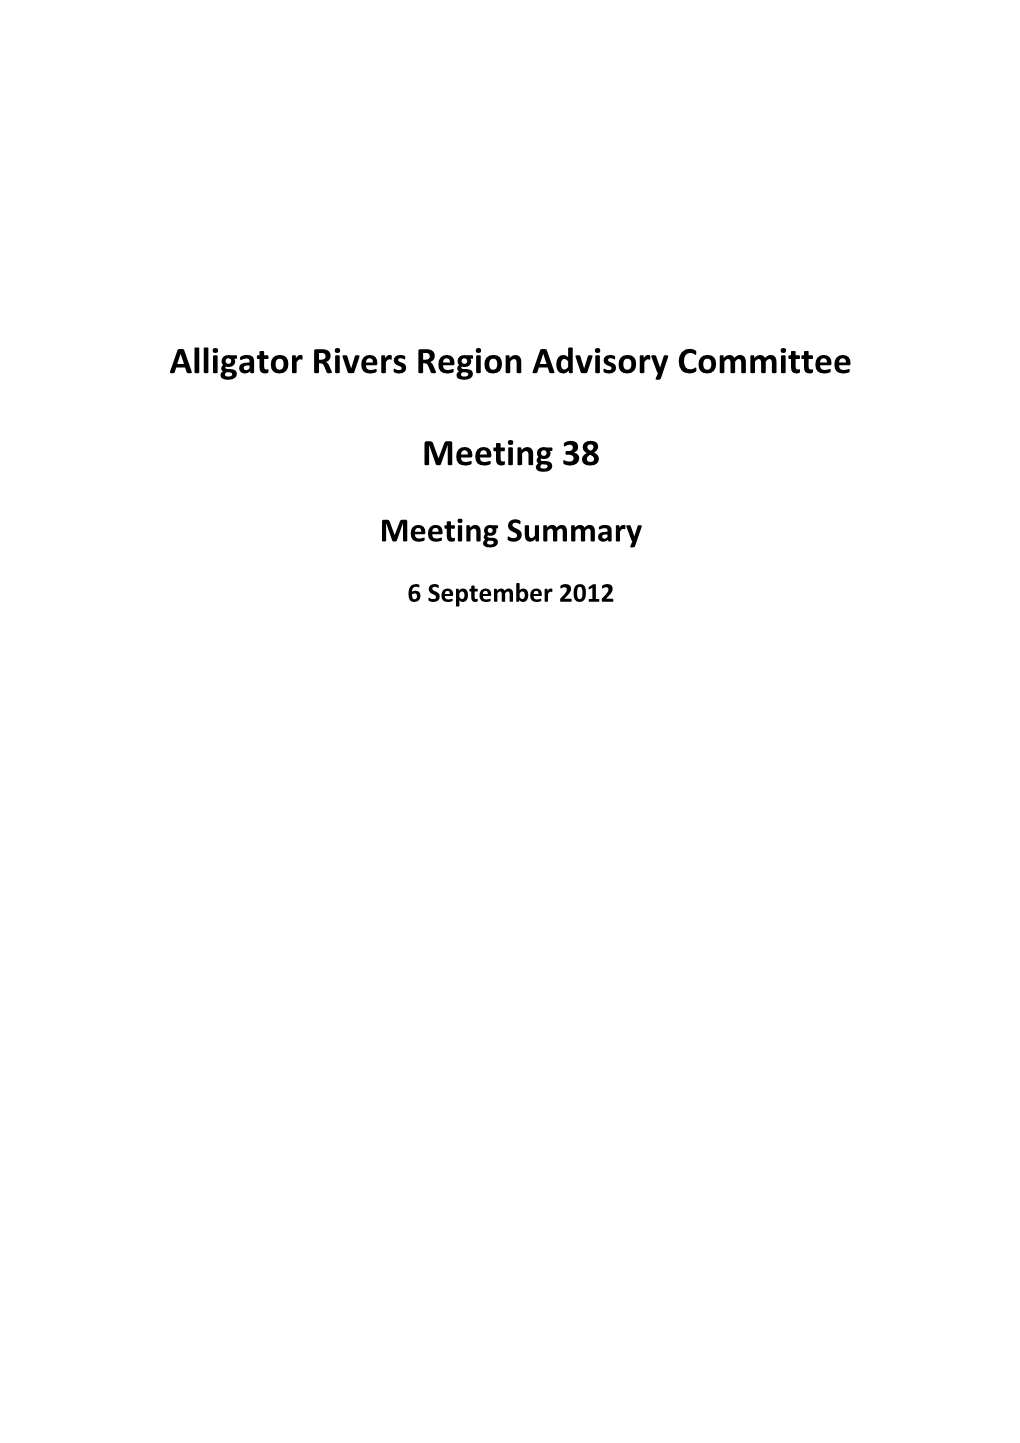 Alligator Rivers Region Advisory Committee Meeting 38 Meeting Summary 6 September 2012